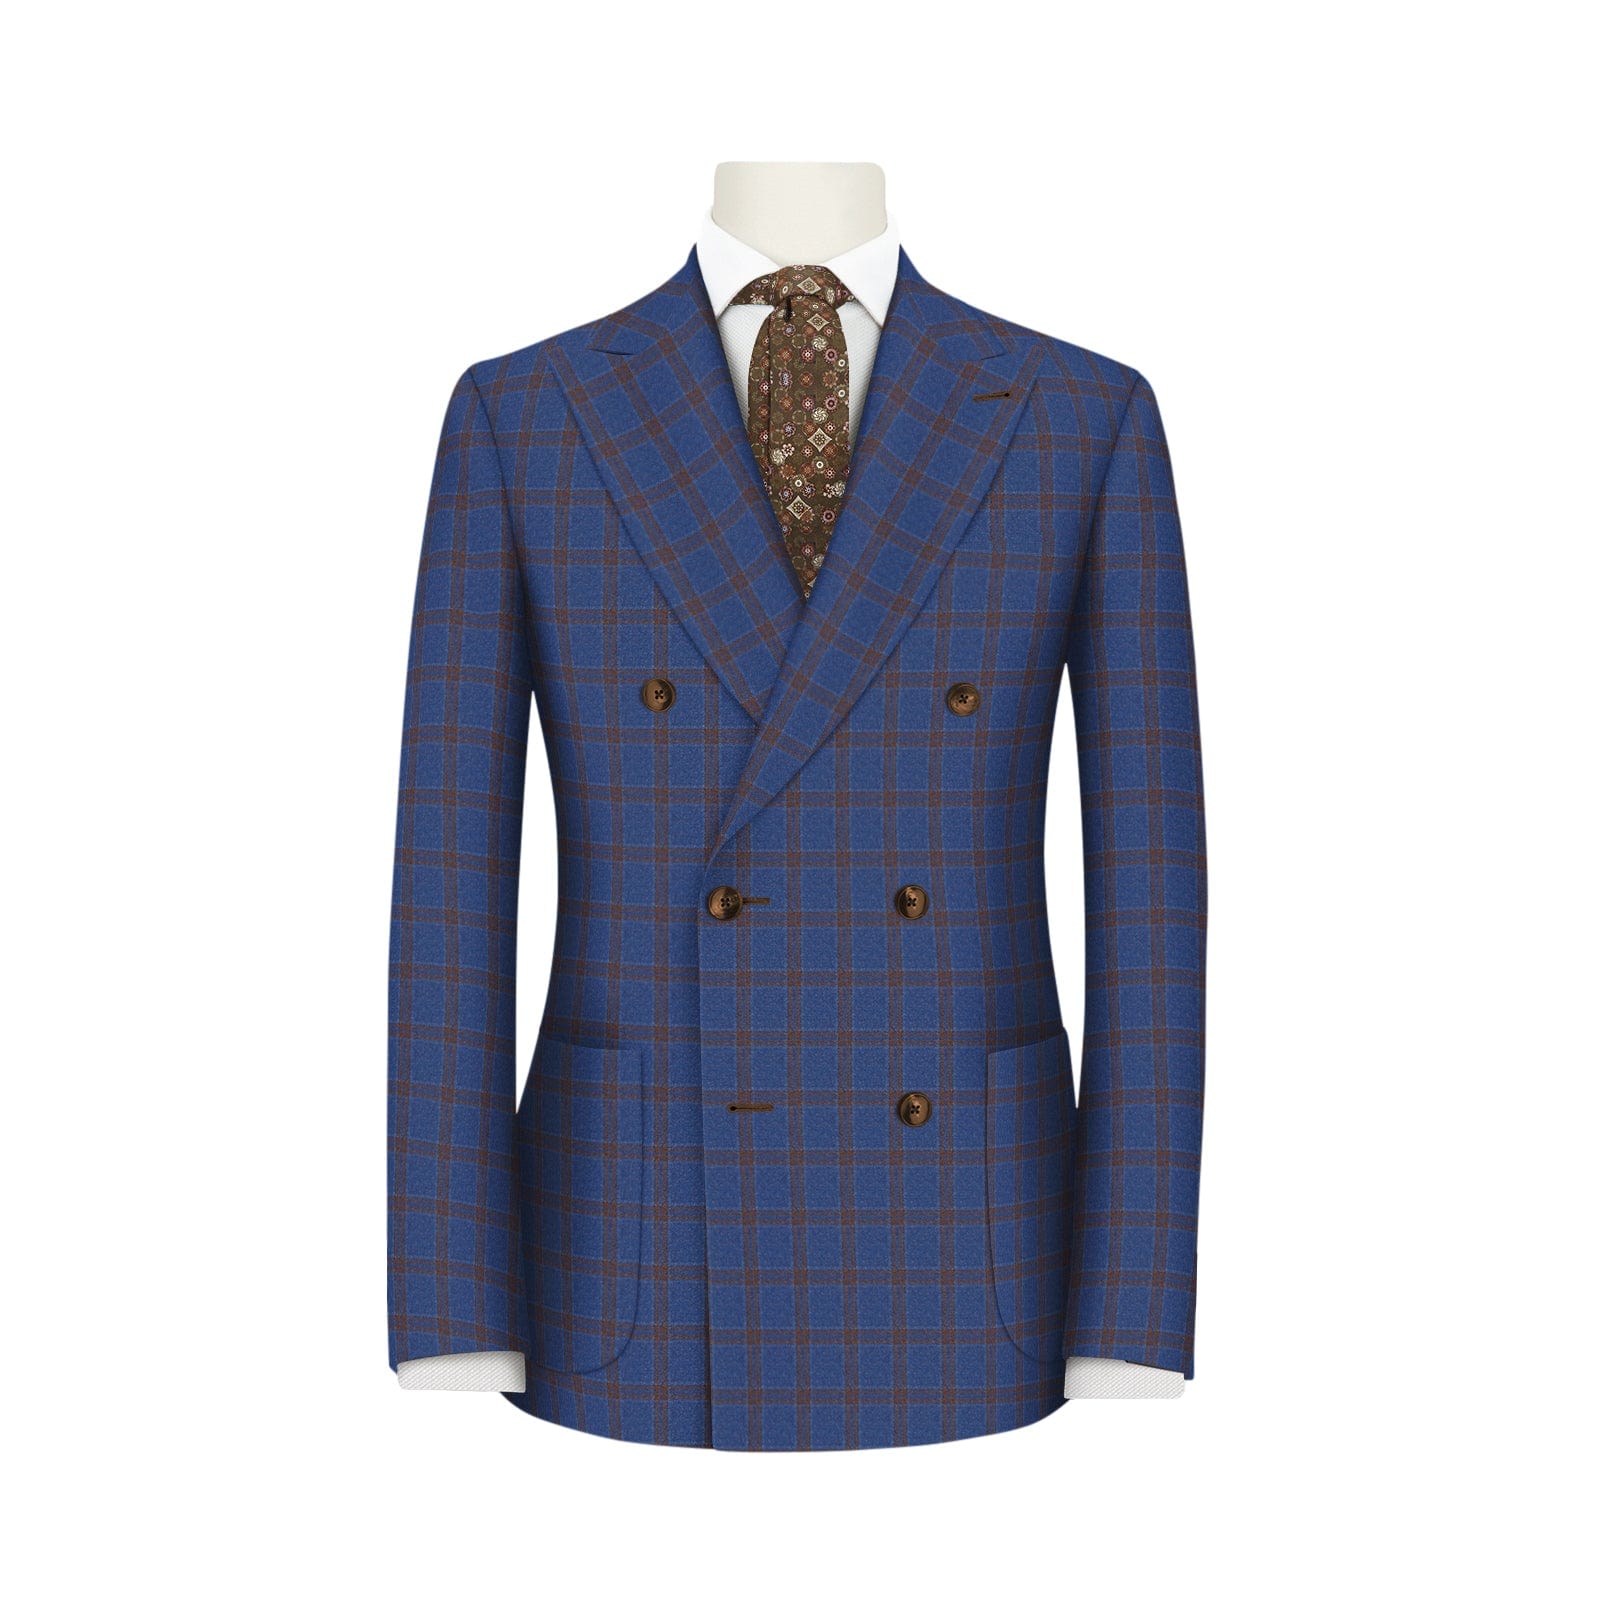 Copper Check on Blue Super 130's Flannel Suit